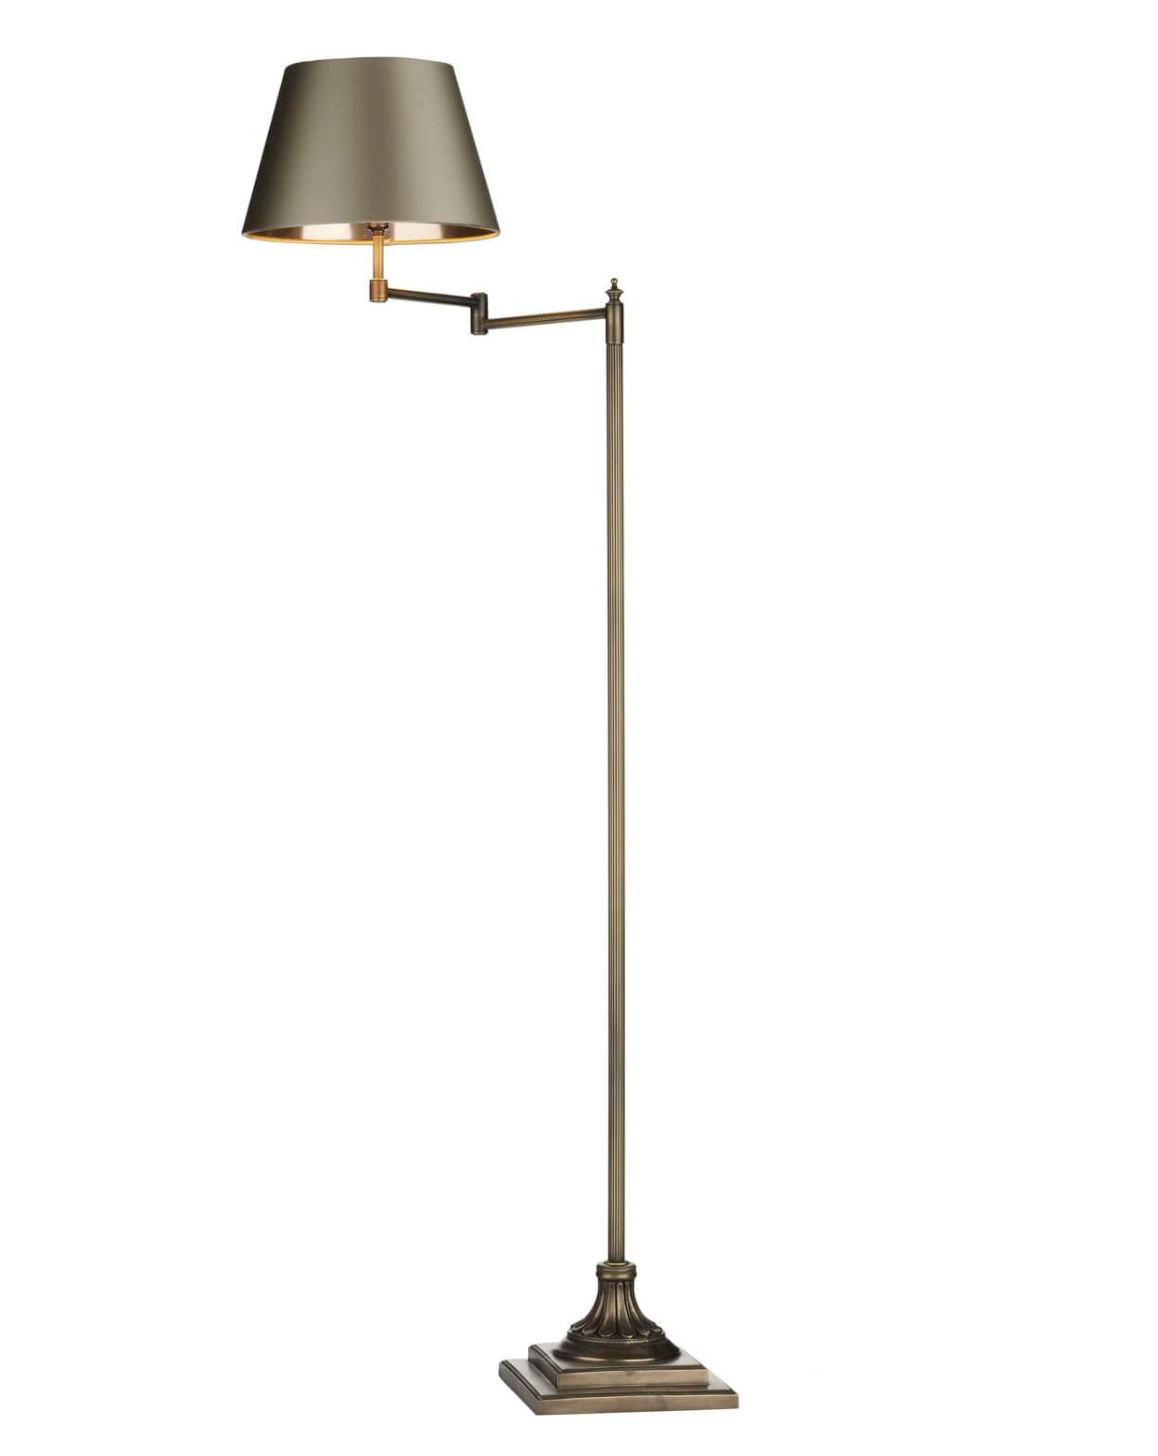 Pimlico Solid Brass Swing Arm Floor Lamp - ID 11461